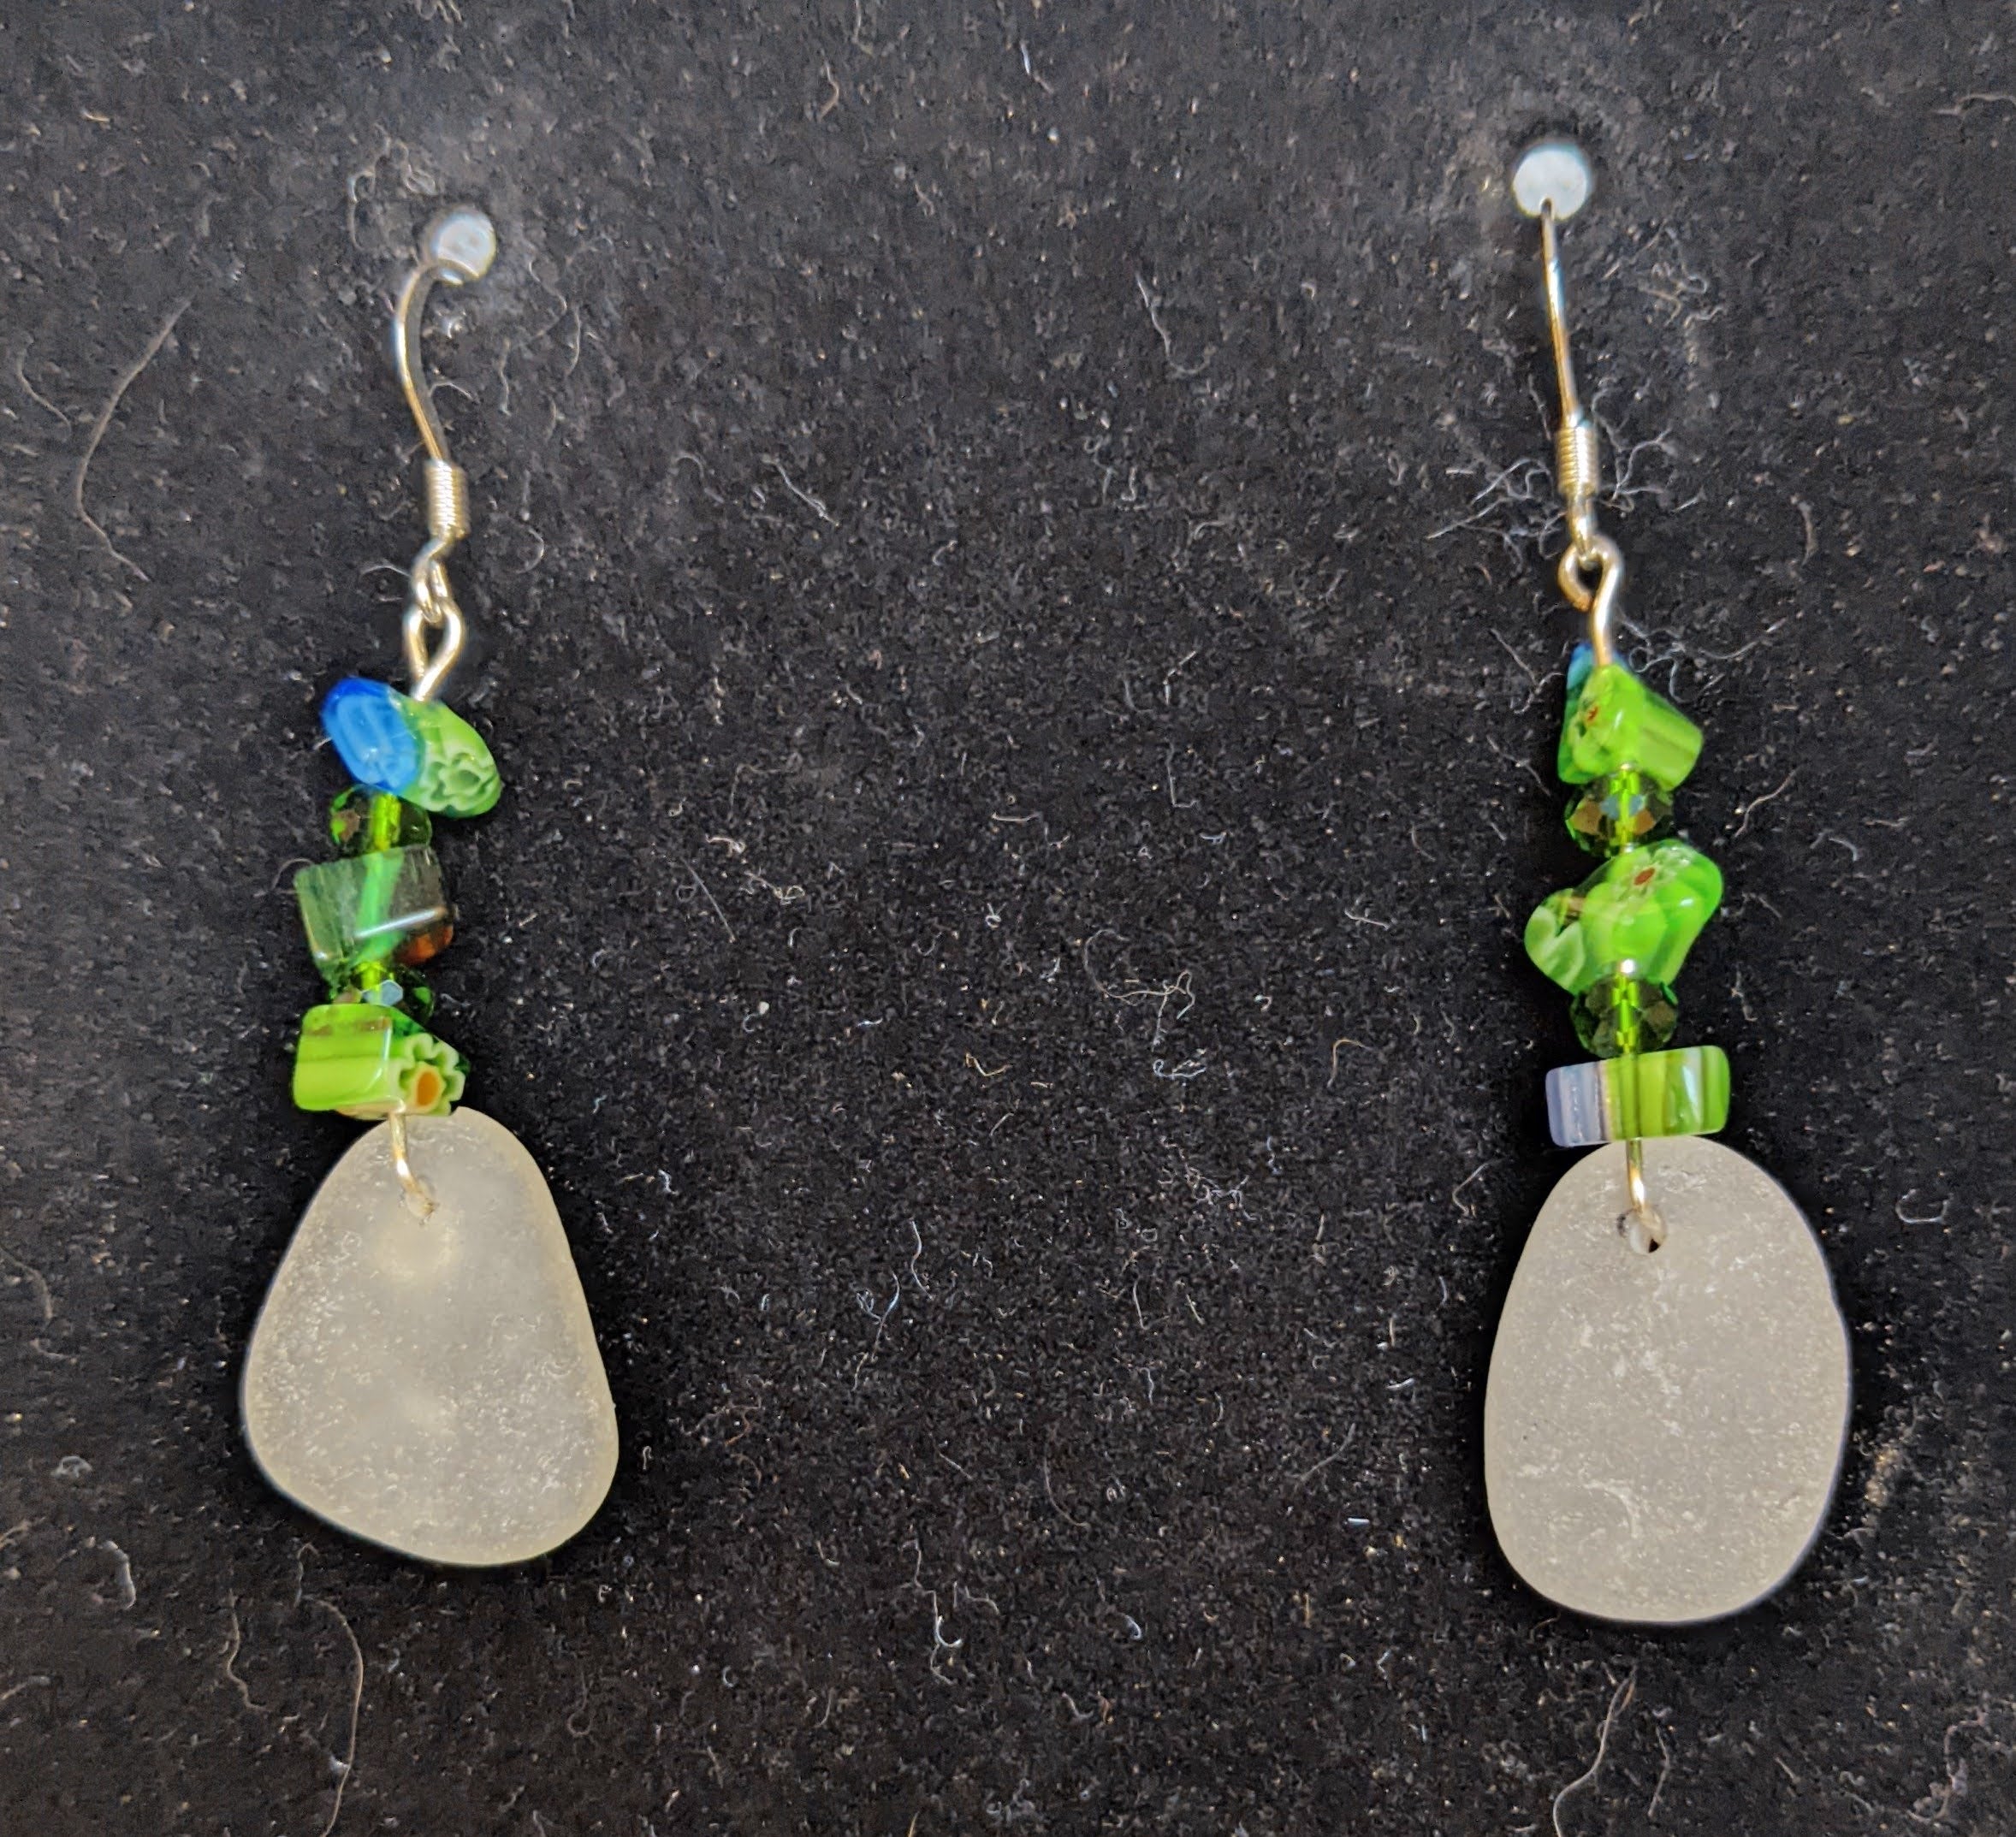 Seaglass and green glass bead earrings